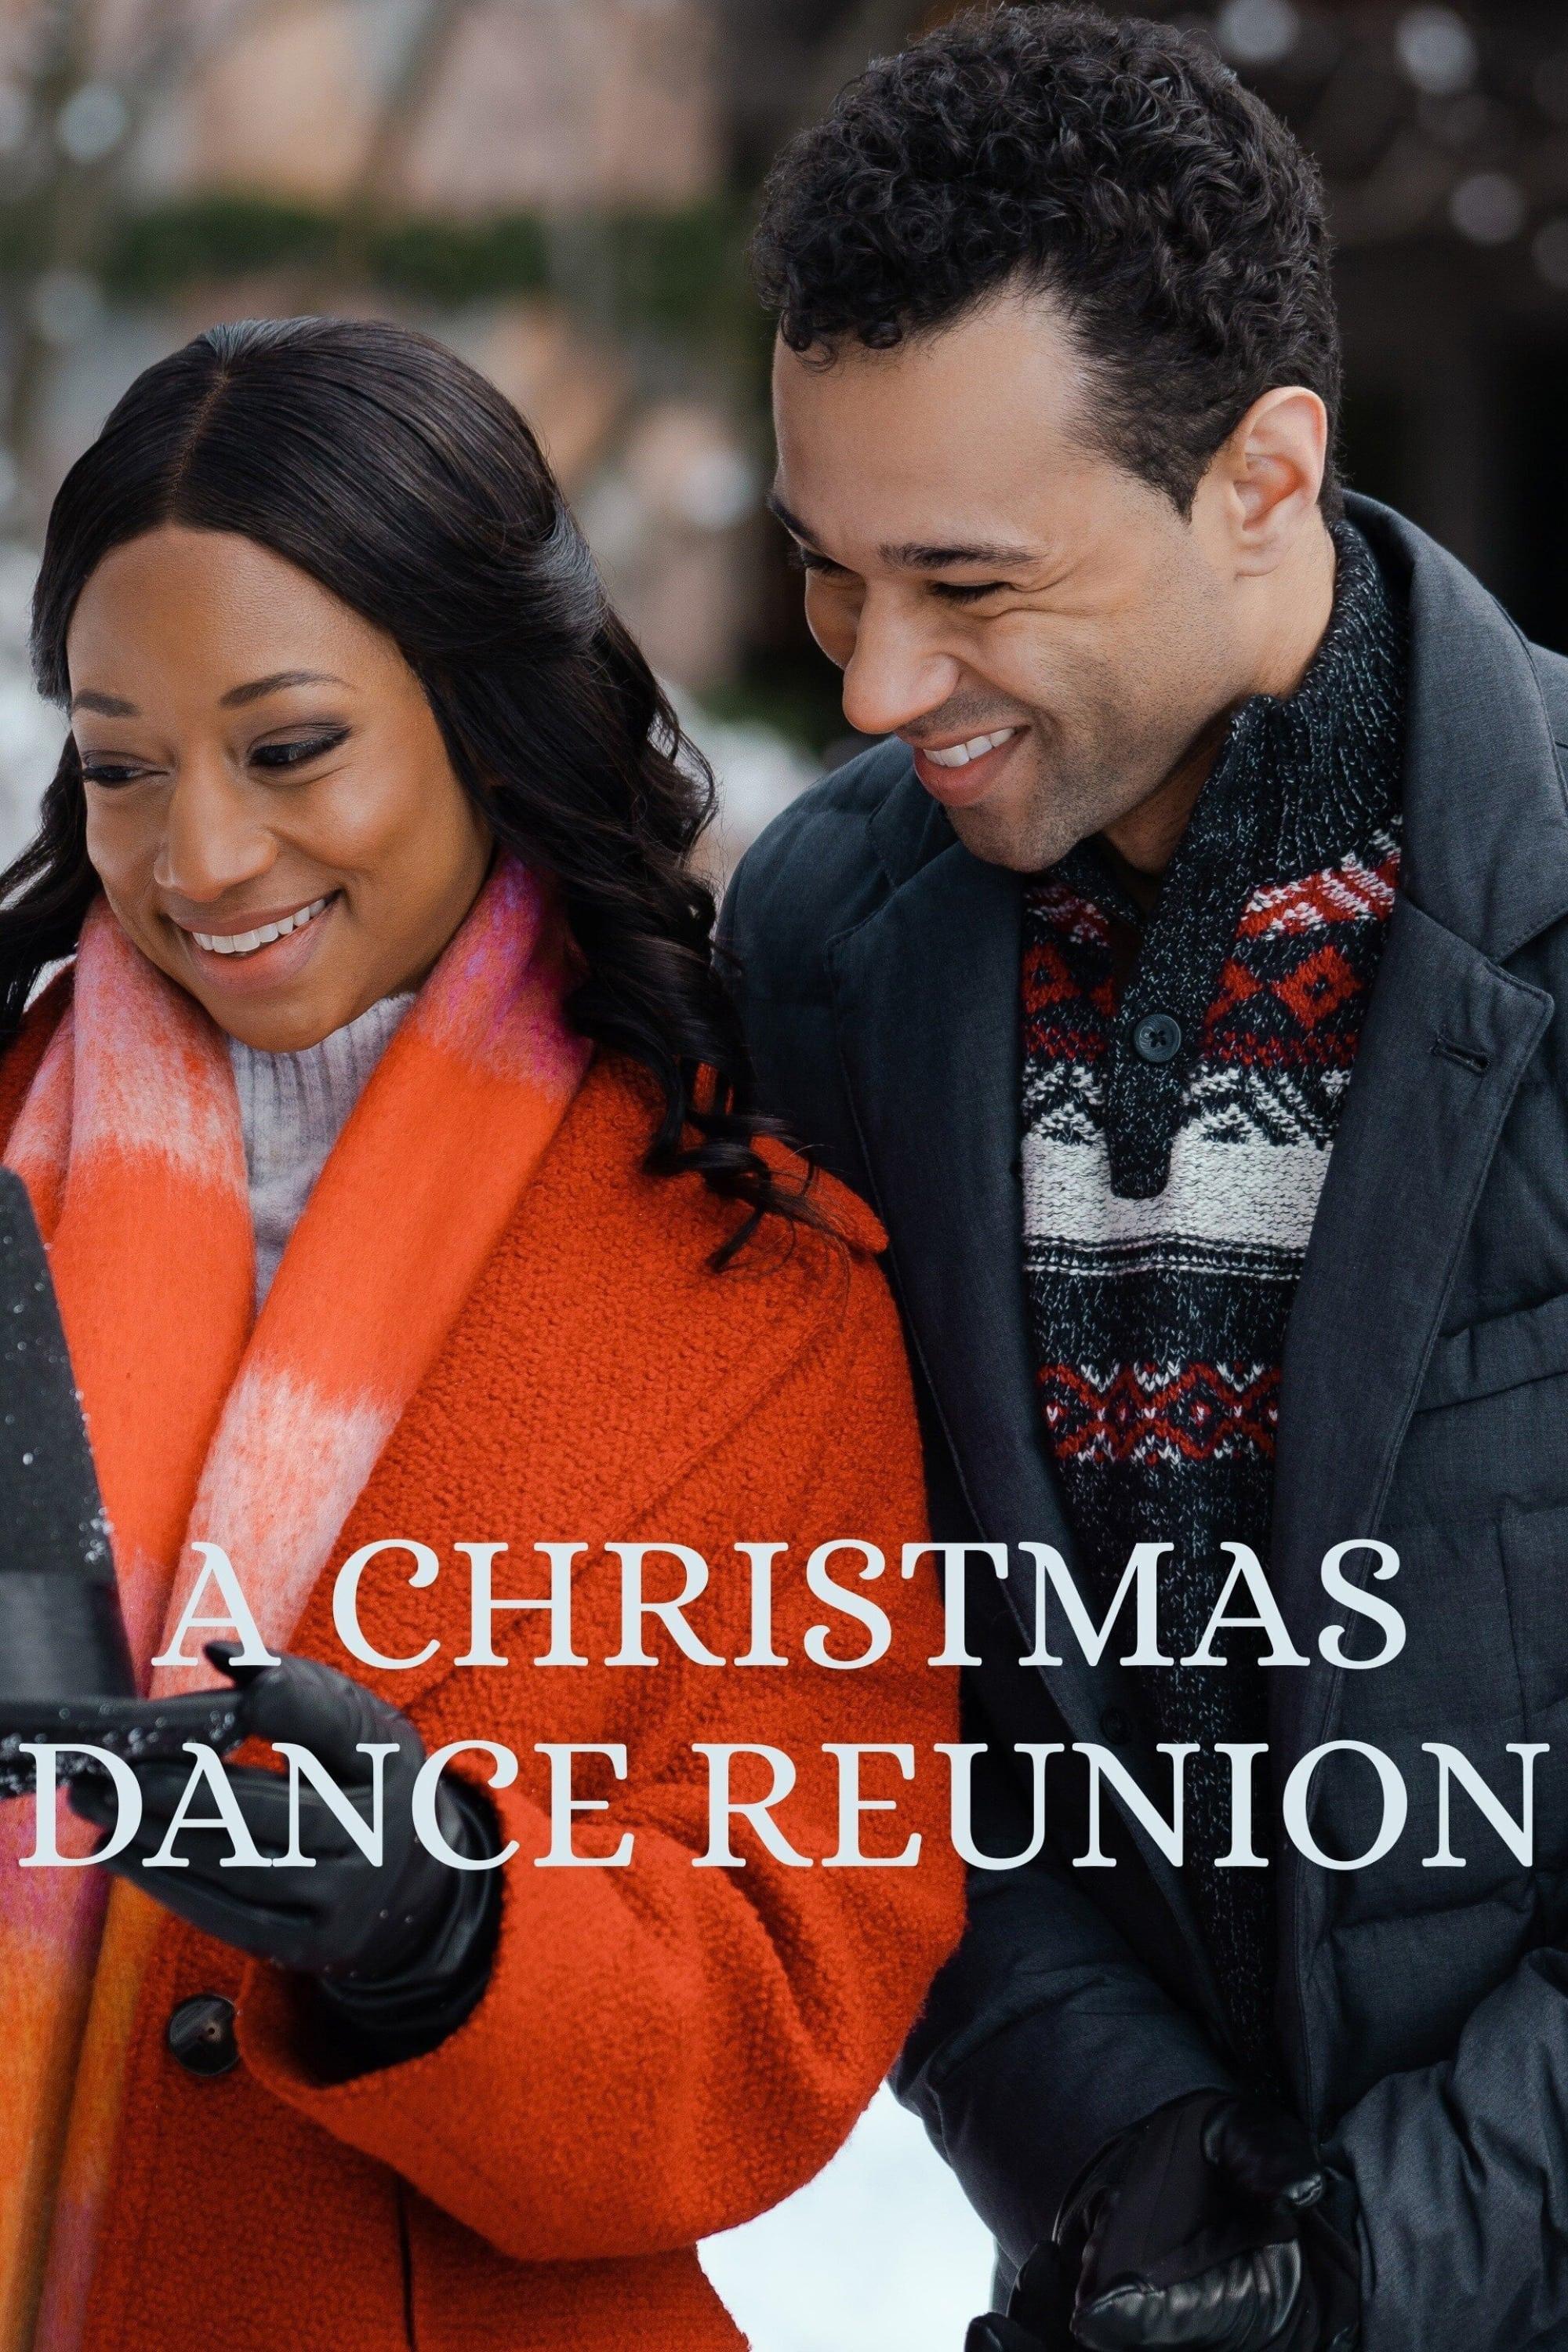 A Christmas Dance Reunion poster